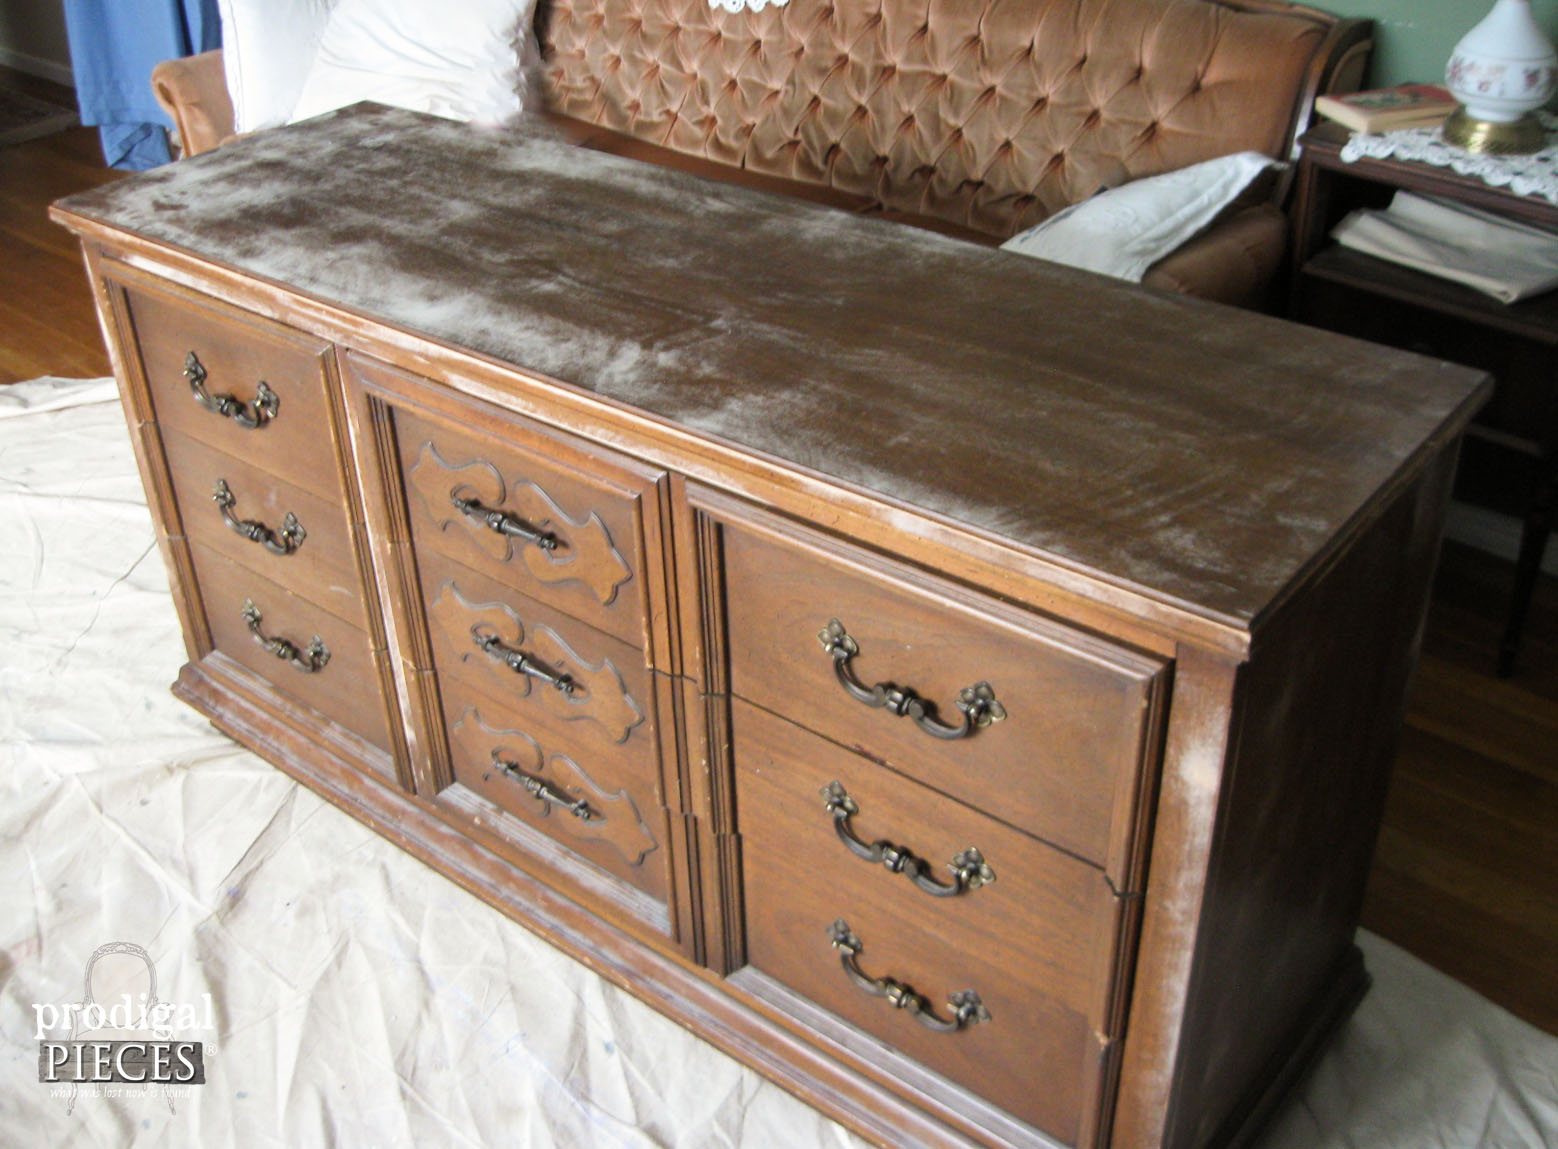 Worn Out Mid Century Dresser Needs Update | Prodigal Pieces | www.prodigalpieces.com